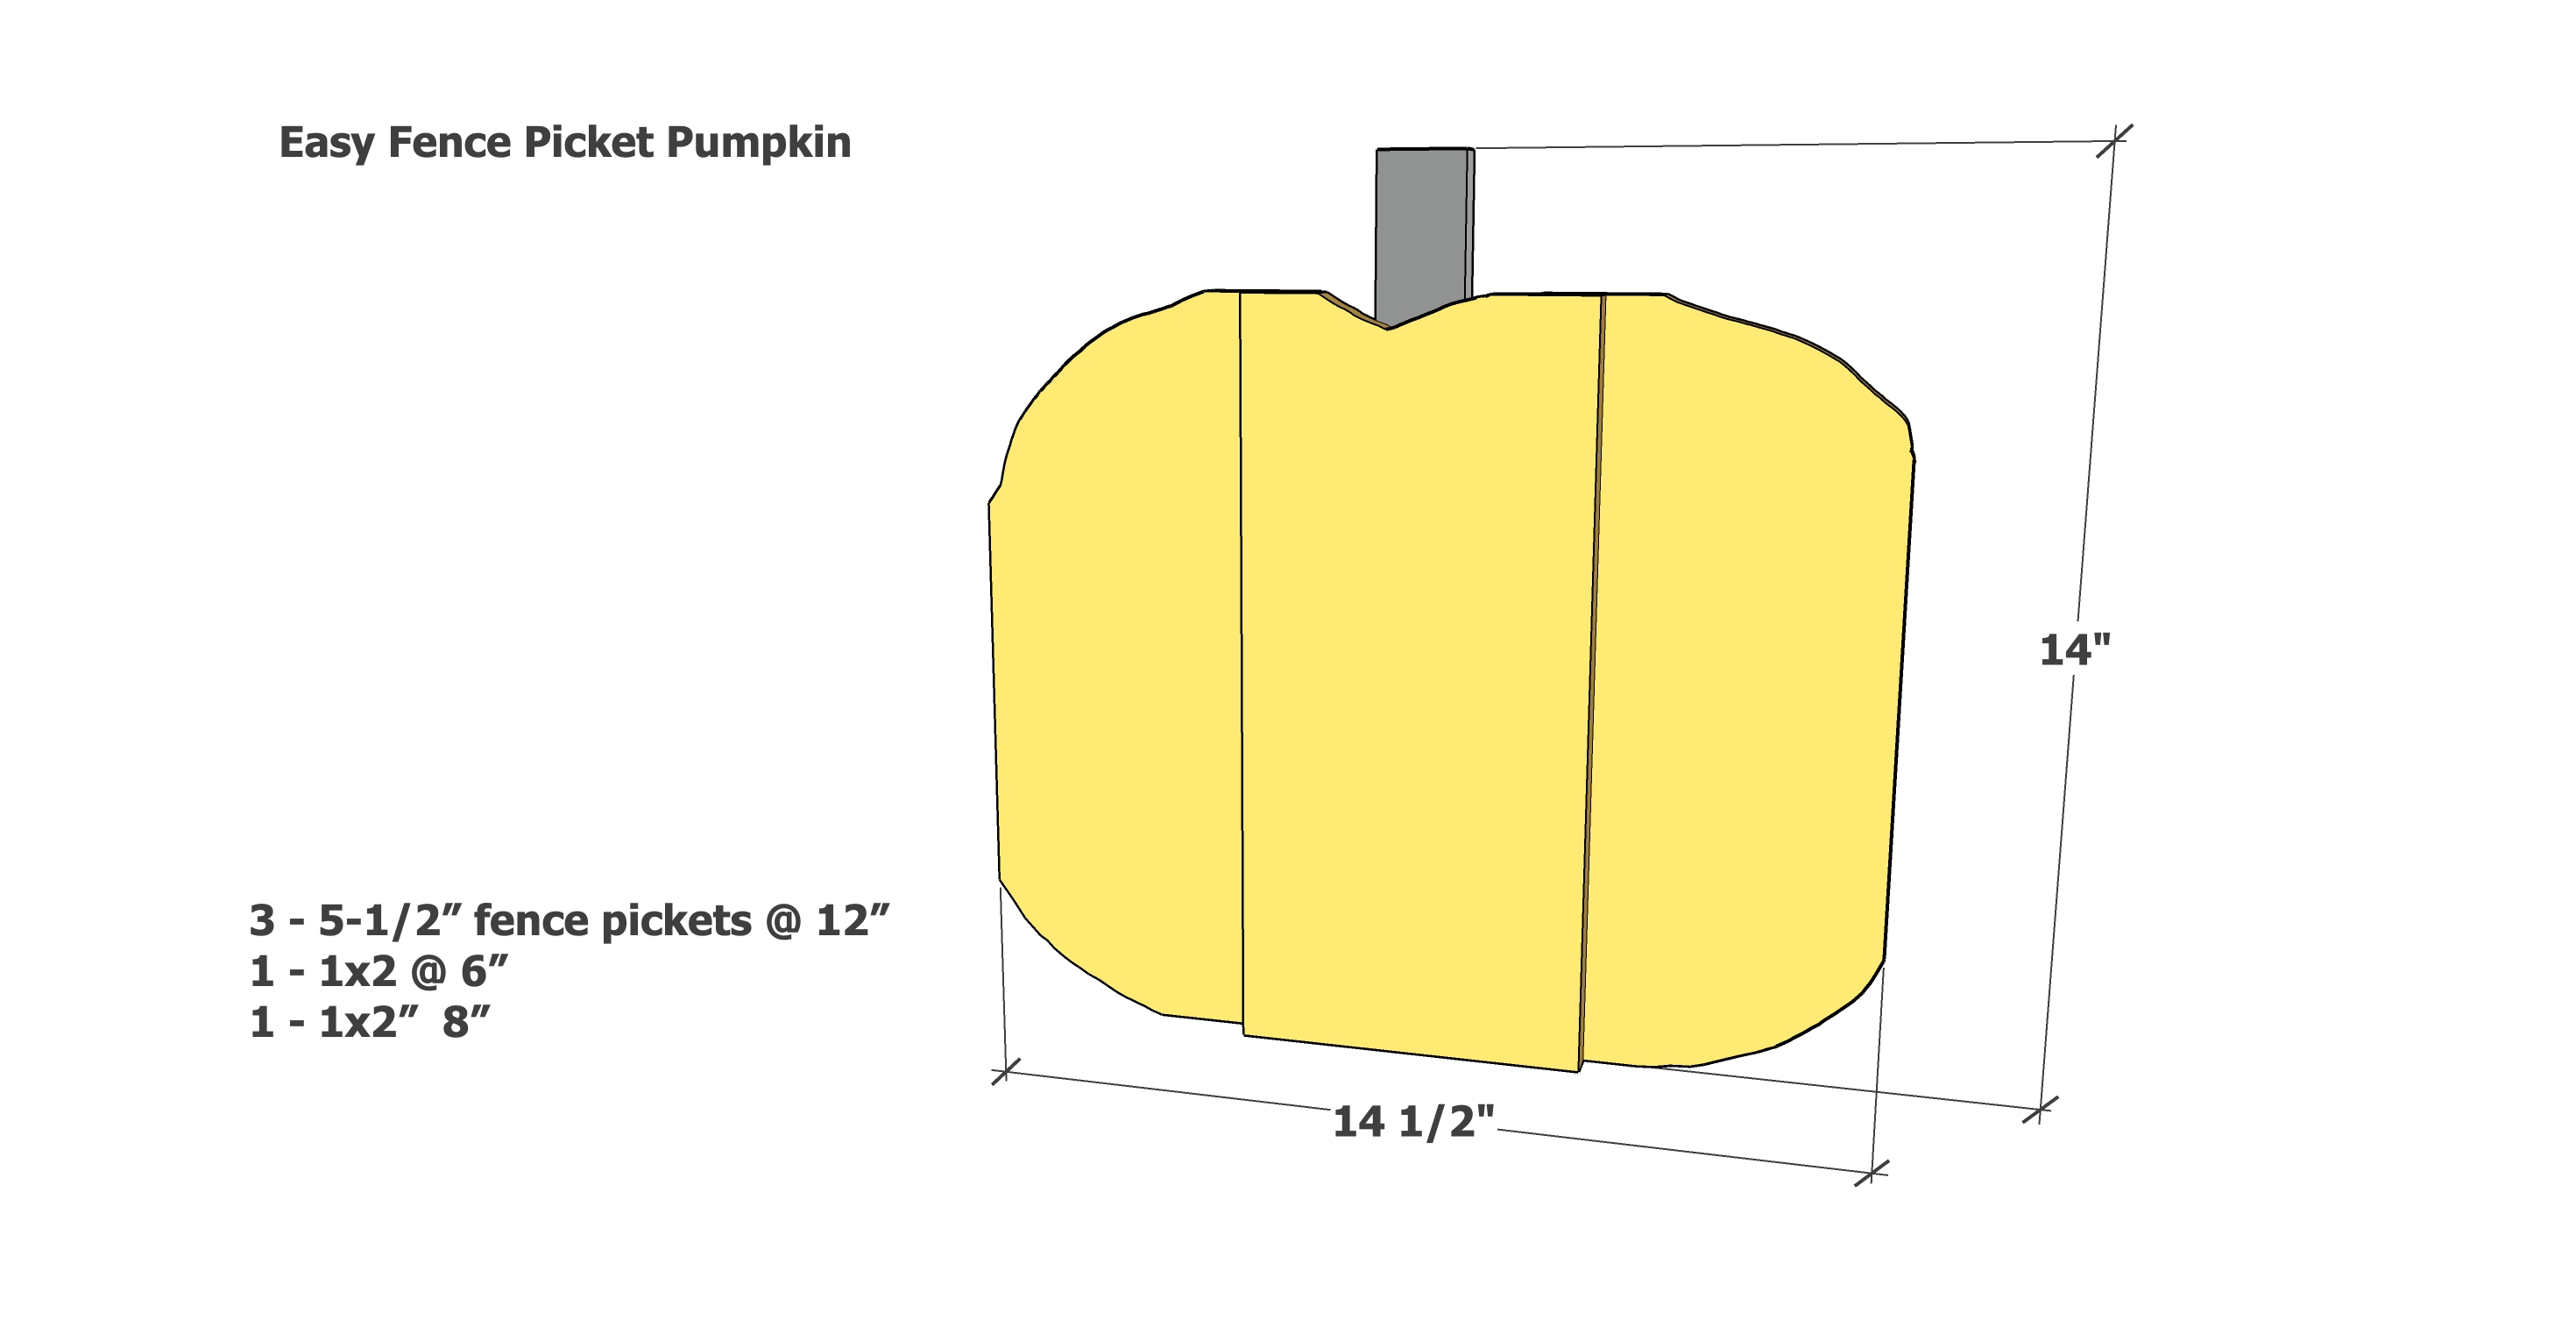 Wood pumpkin dimensions